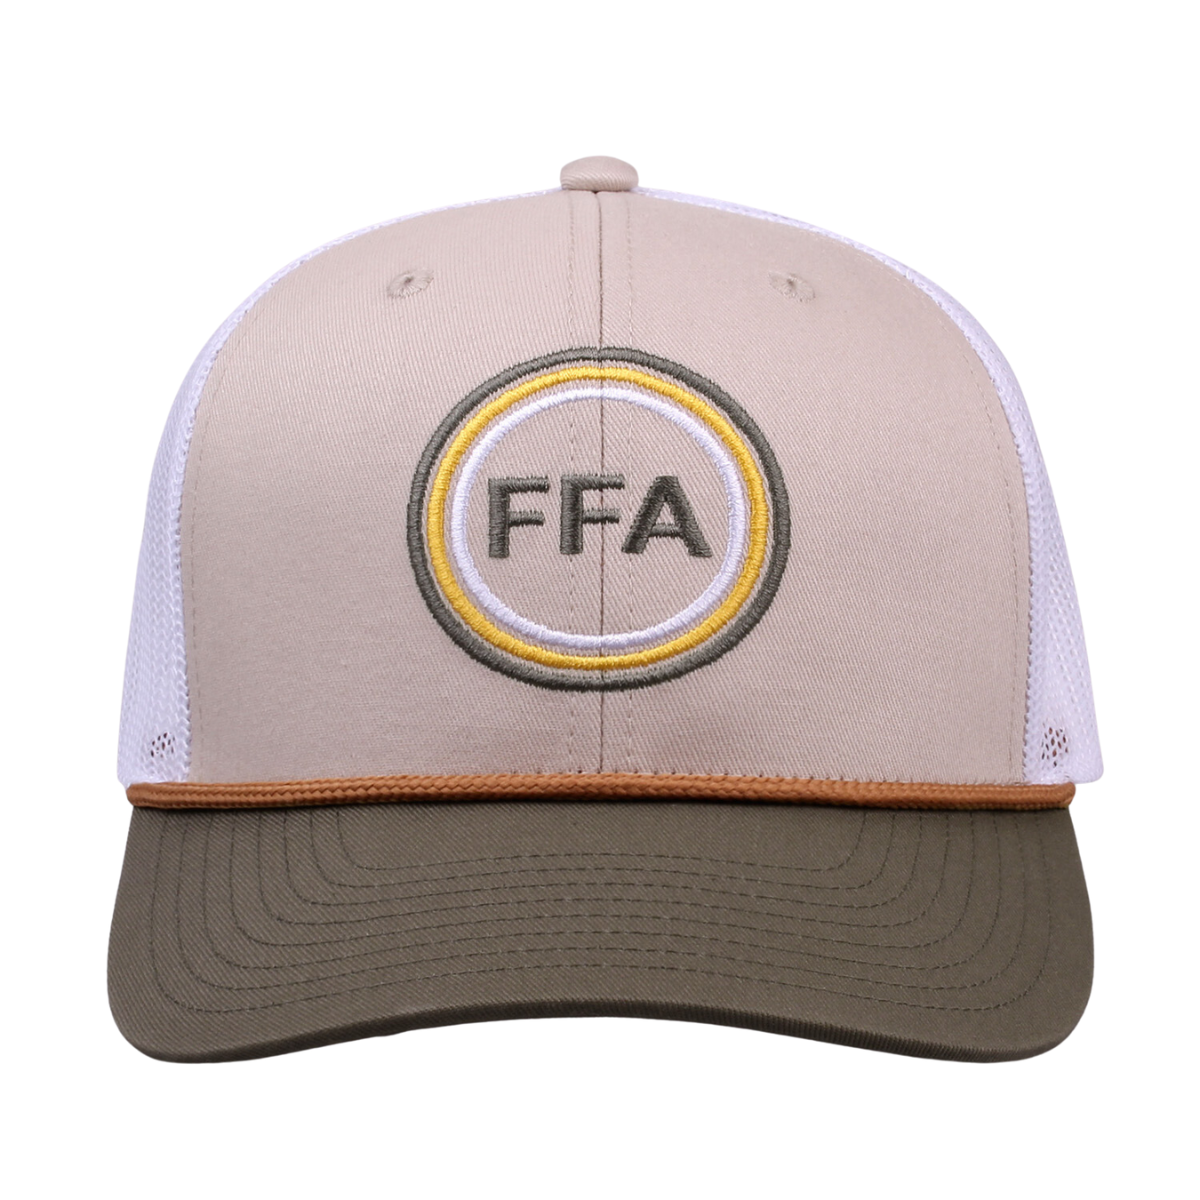 American Flag FAFO Hat – JT's Custom Woodworks